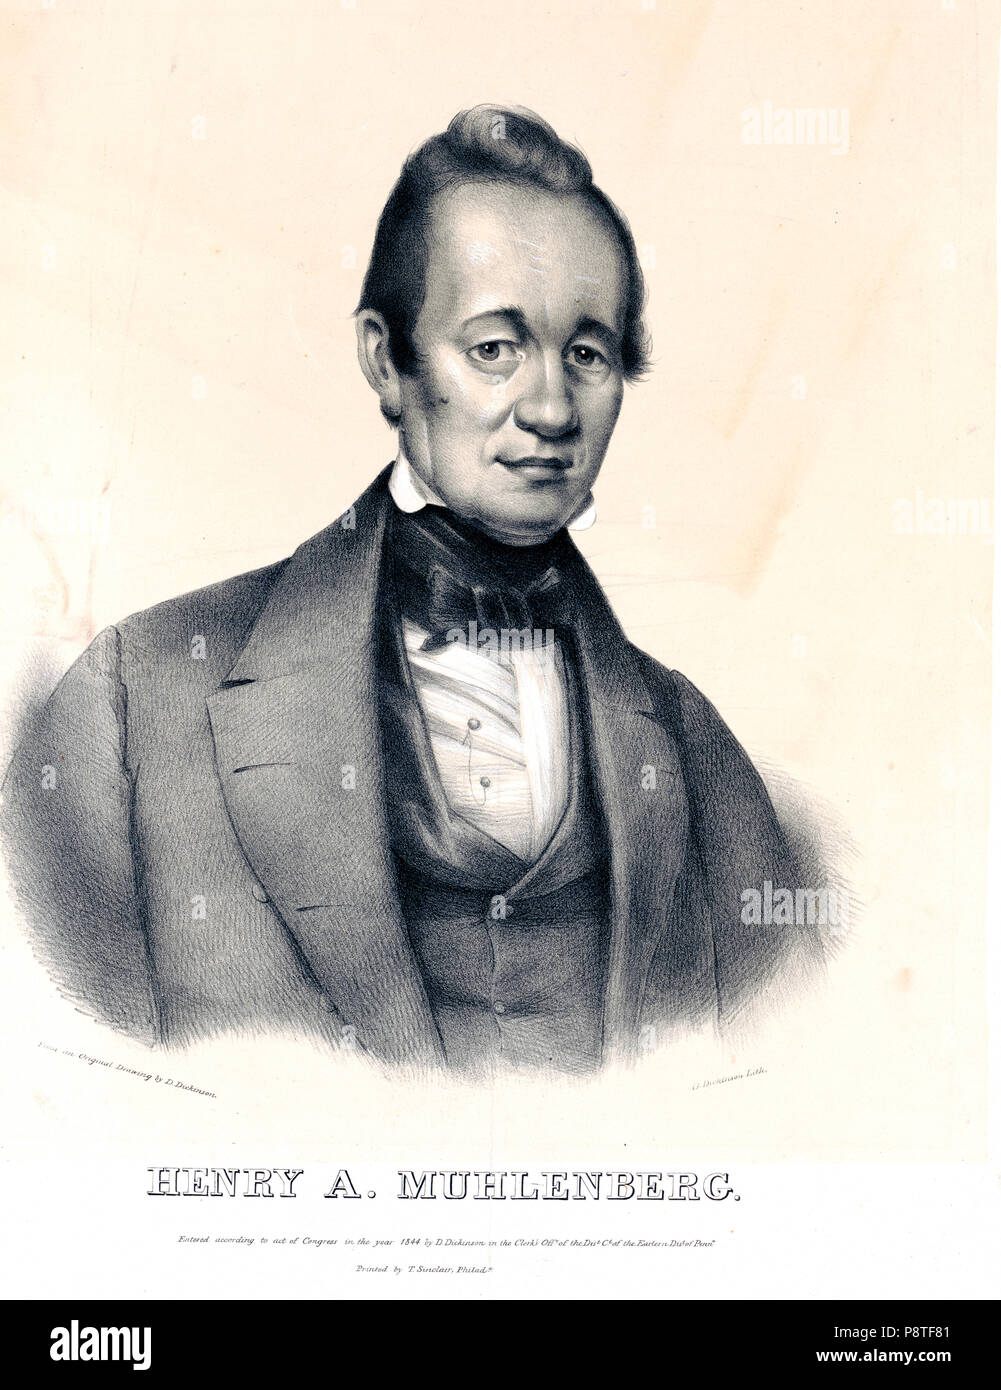 Henry A. Muhlenberg ca 1844 Stock Photo